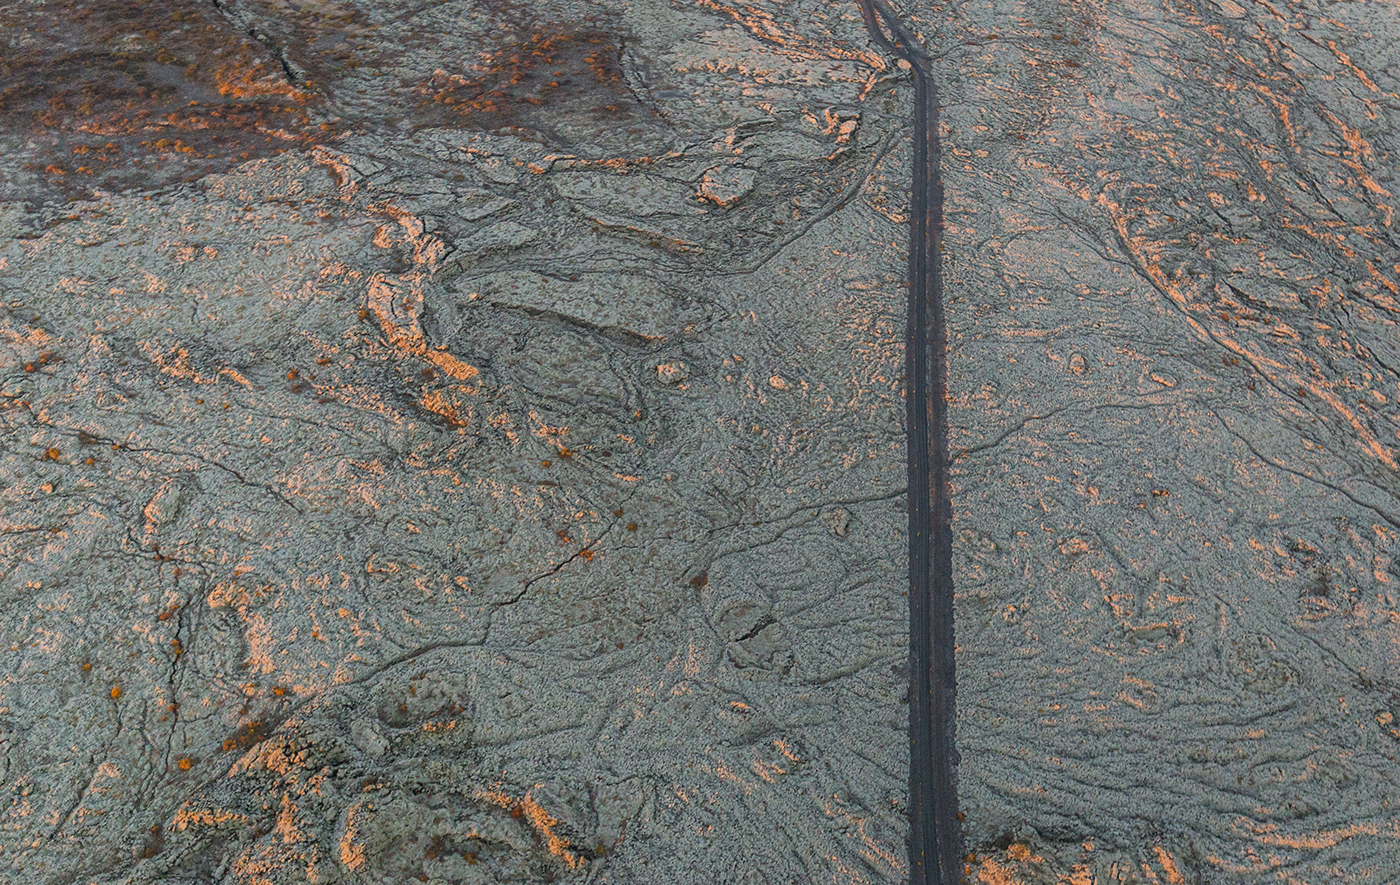 iceland RoadTrip movie photos Nature wild sauvage beauty Landscape